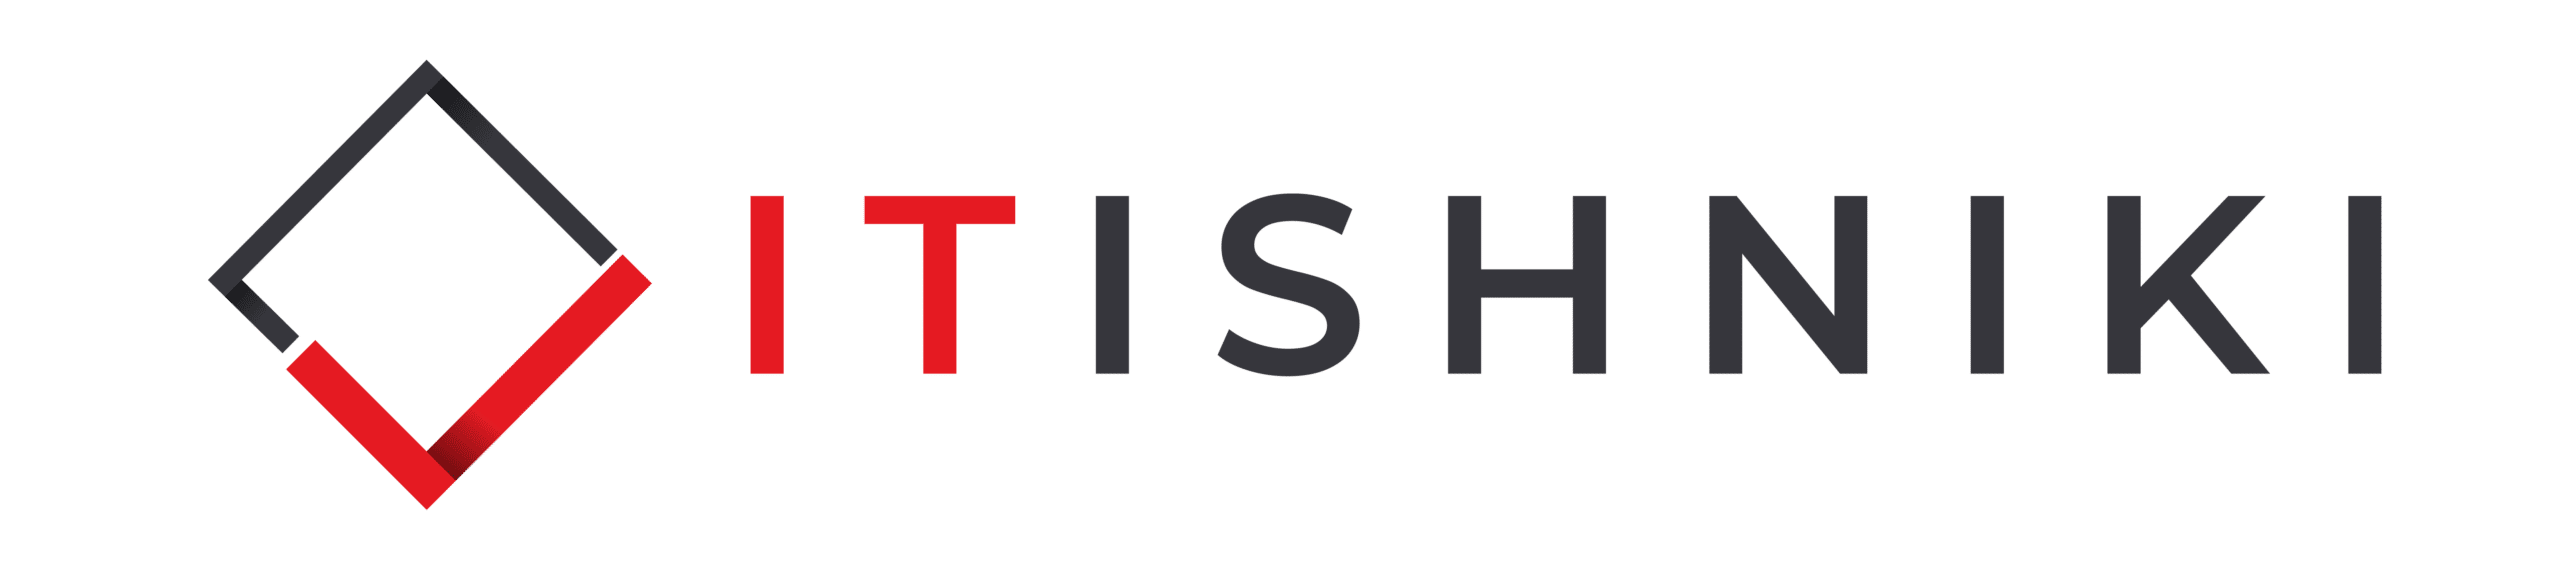 iTishniki Logo - Web Development & Design